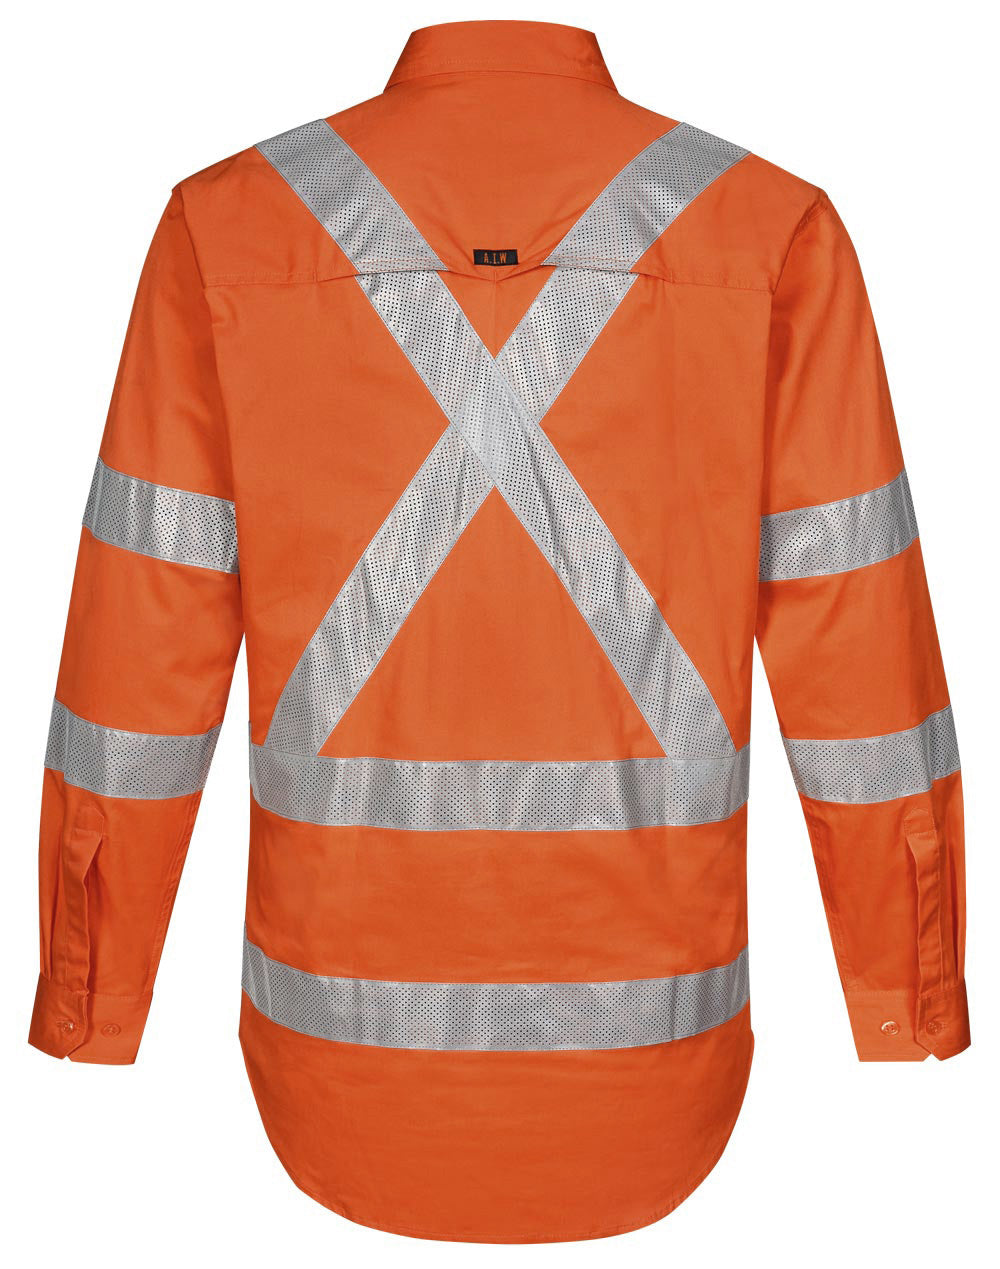 AIW- SW66 NSW Rail Lightweight Safety Shirt